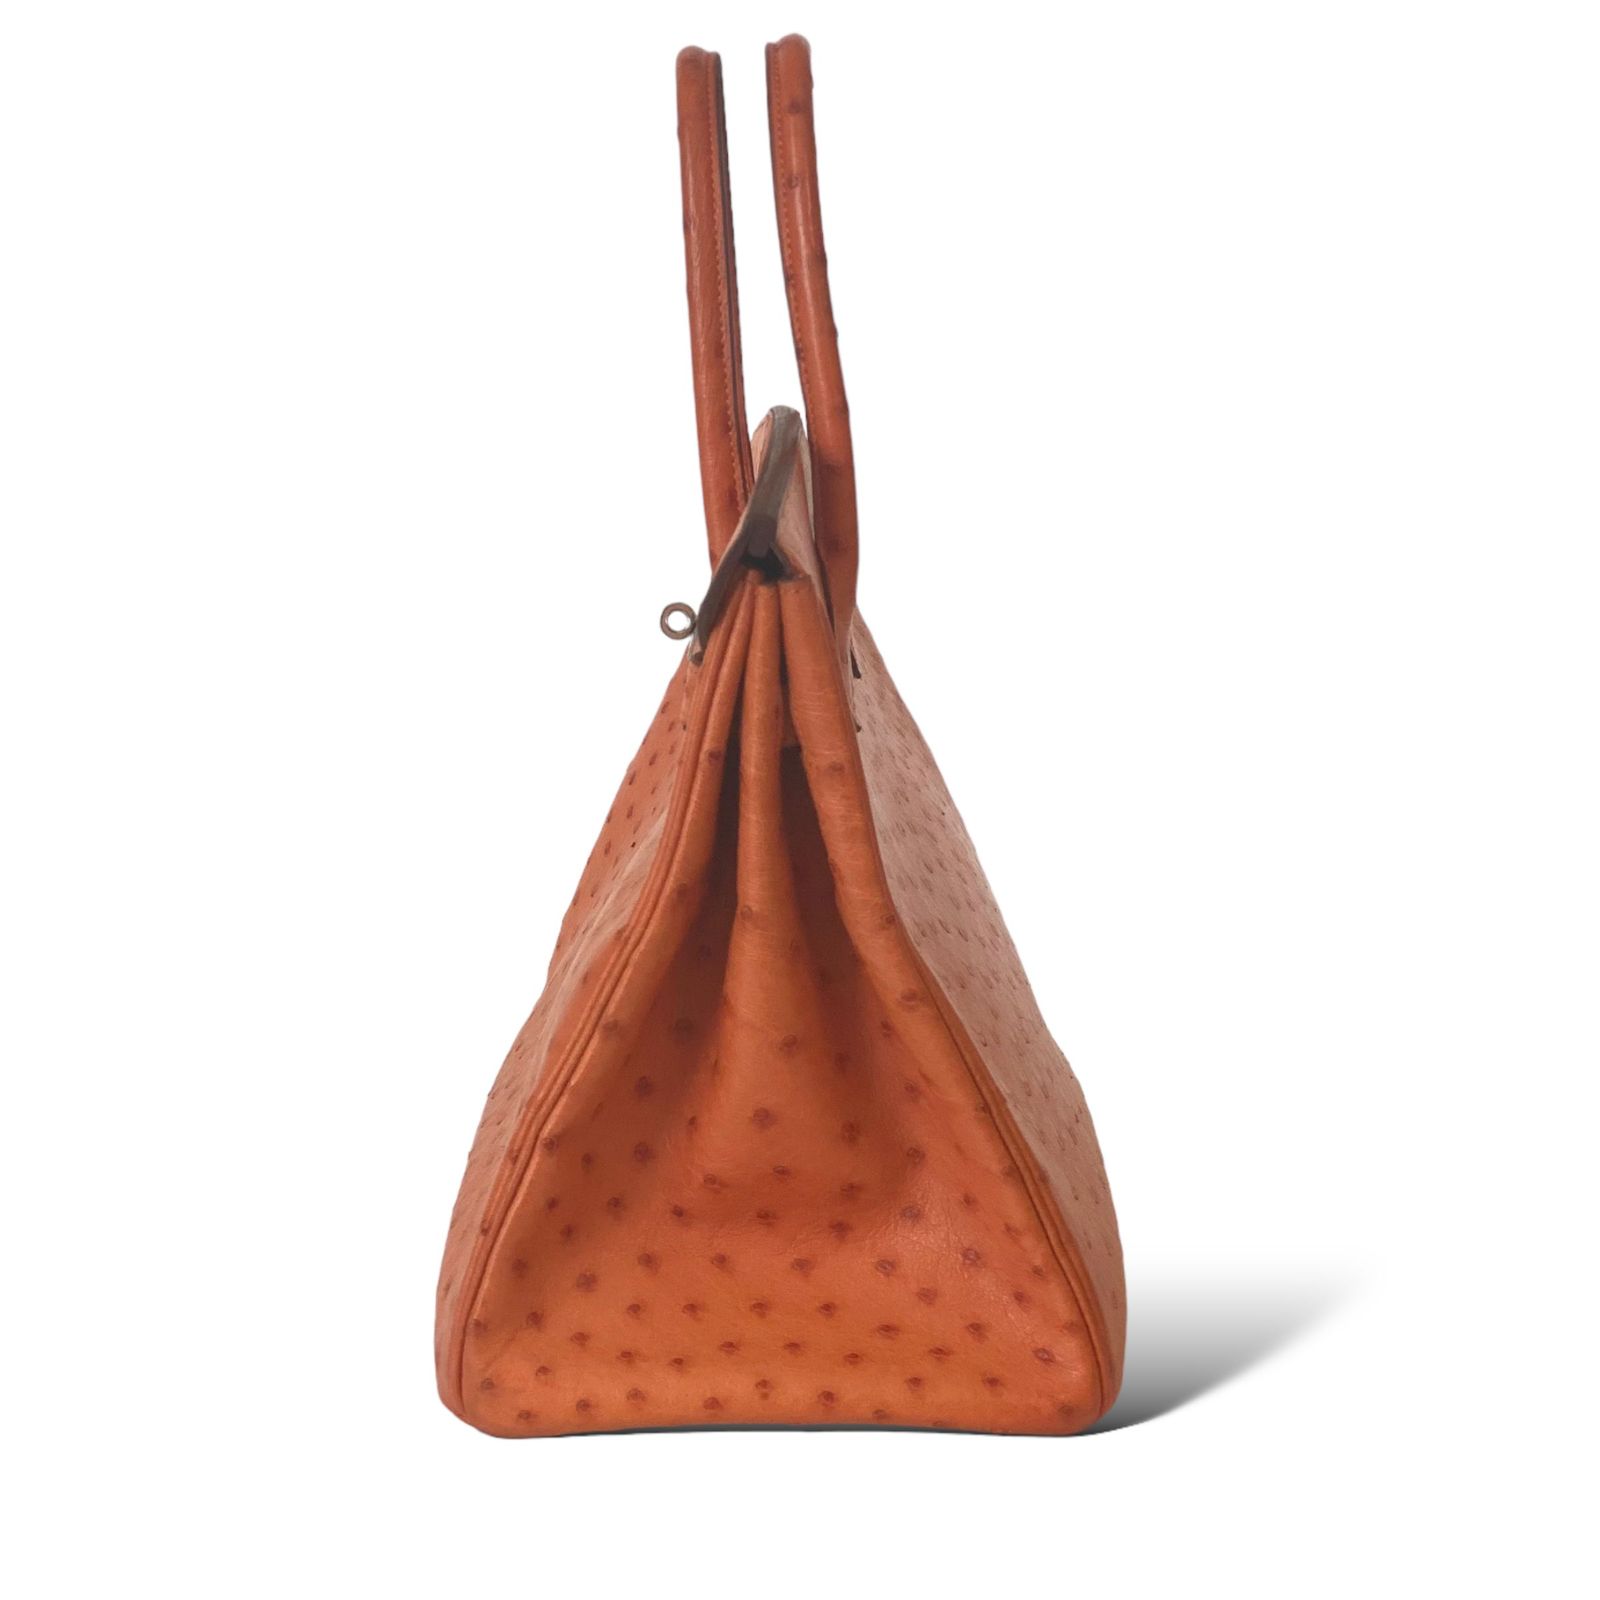 Onhand Authentic Hermes Birkin 35 B35 Orange Hand Bag, Luxury